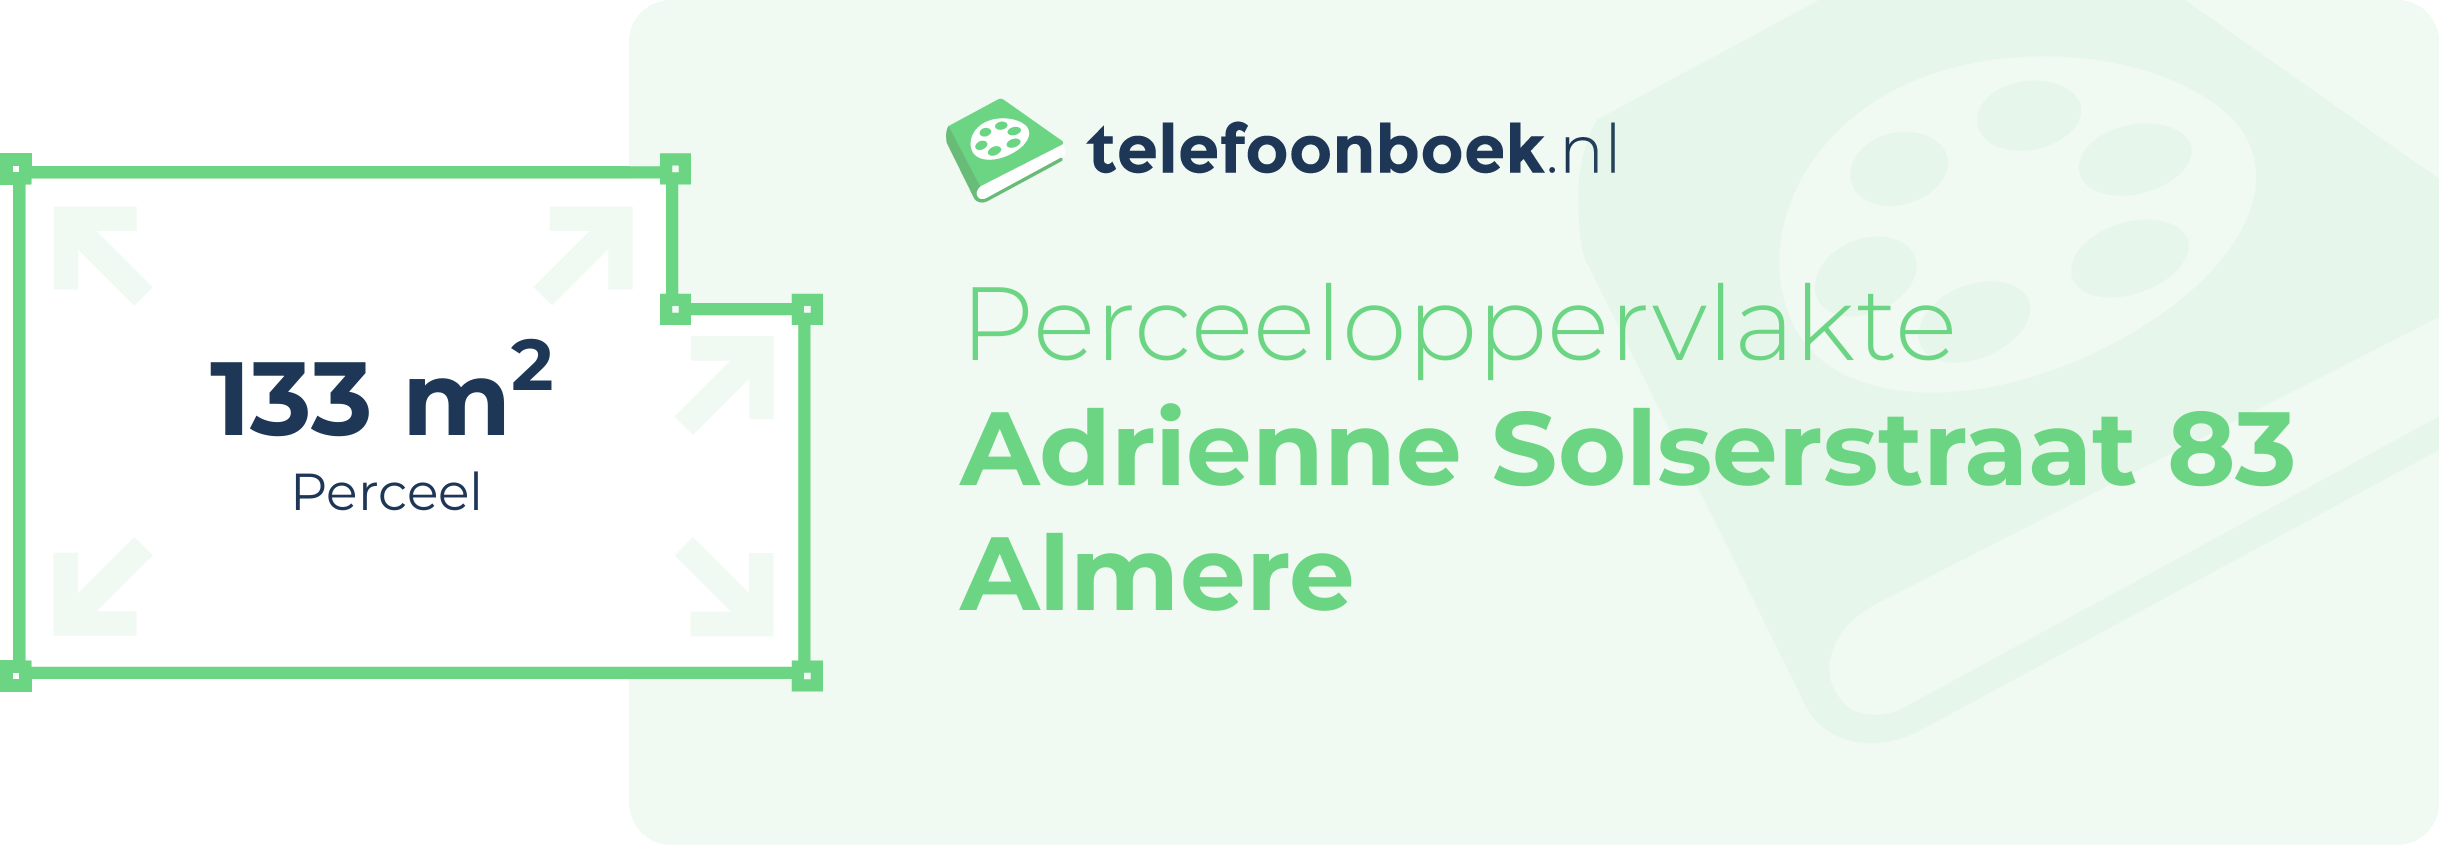 Perceeloppervlakte Adrienne Solserstraat 83 Almere